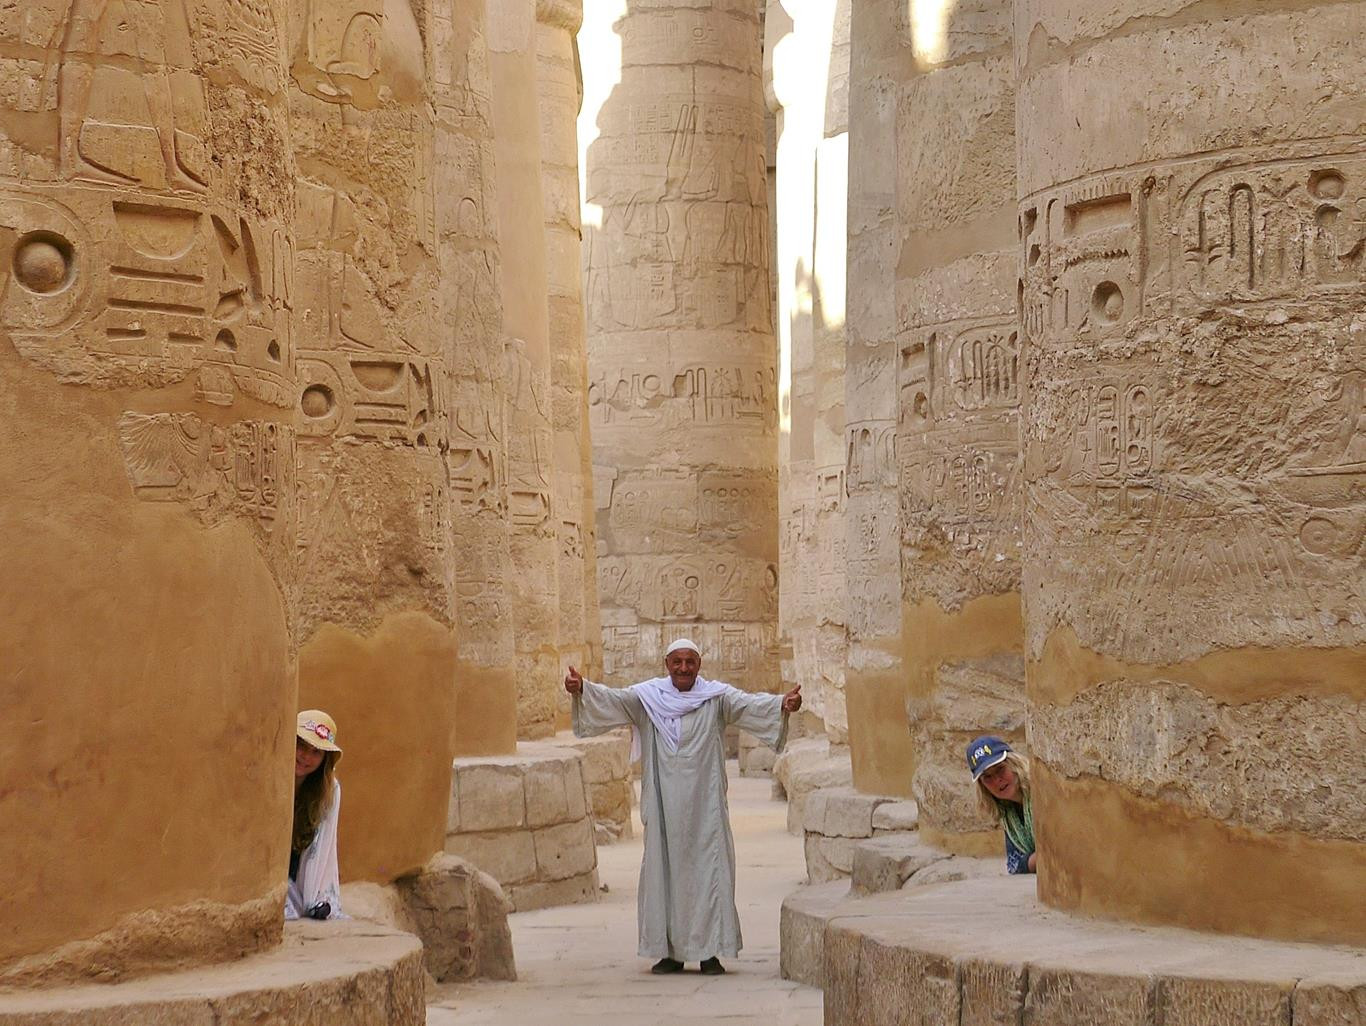 Karnak Temple, Luxor. This man's unexpected photobomb was definitely worthy of baksheesh